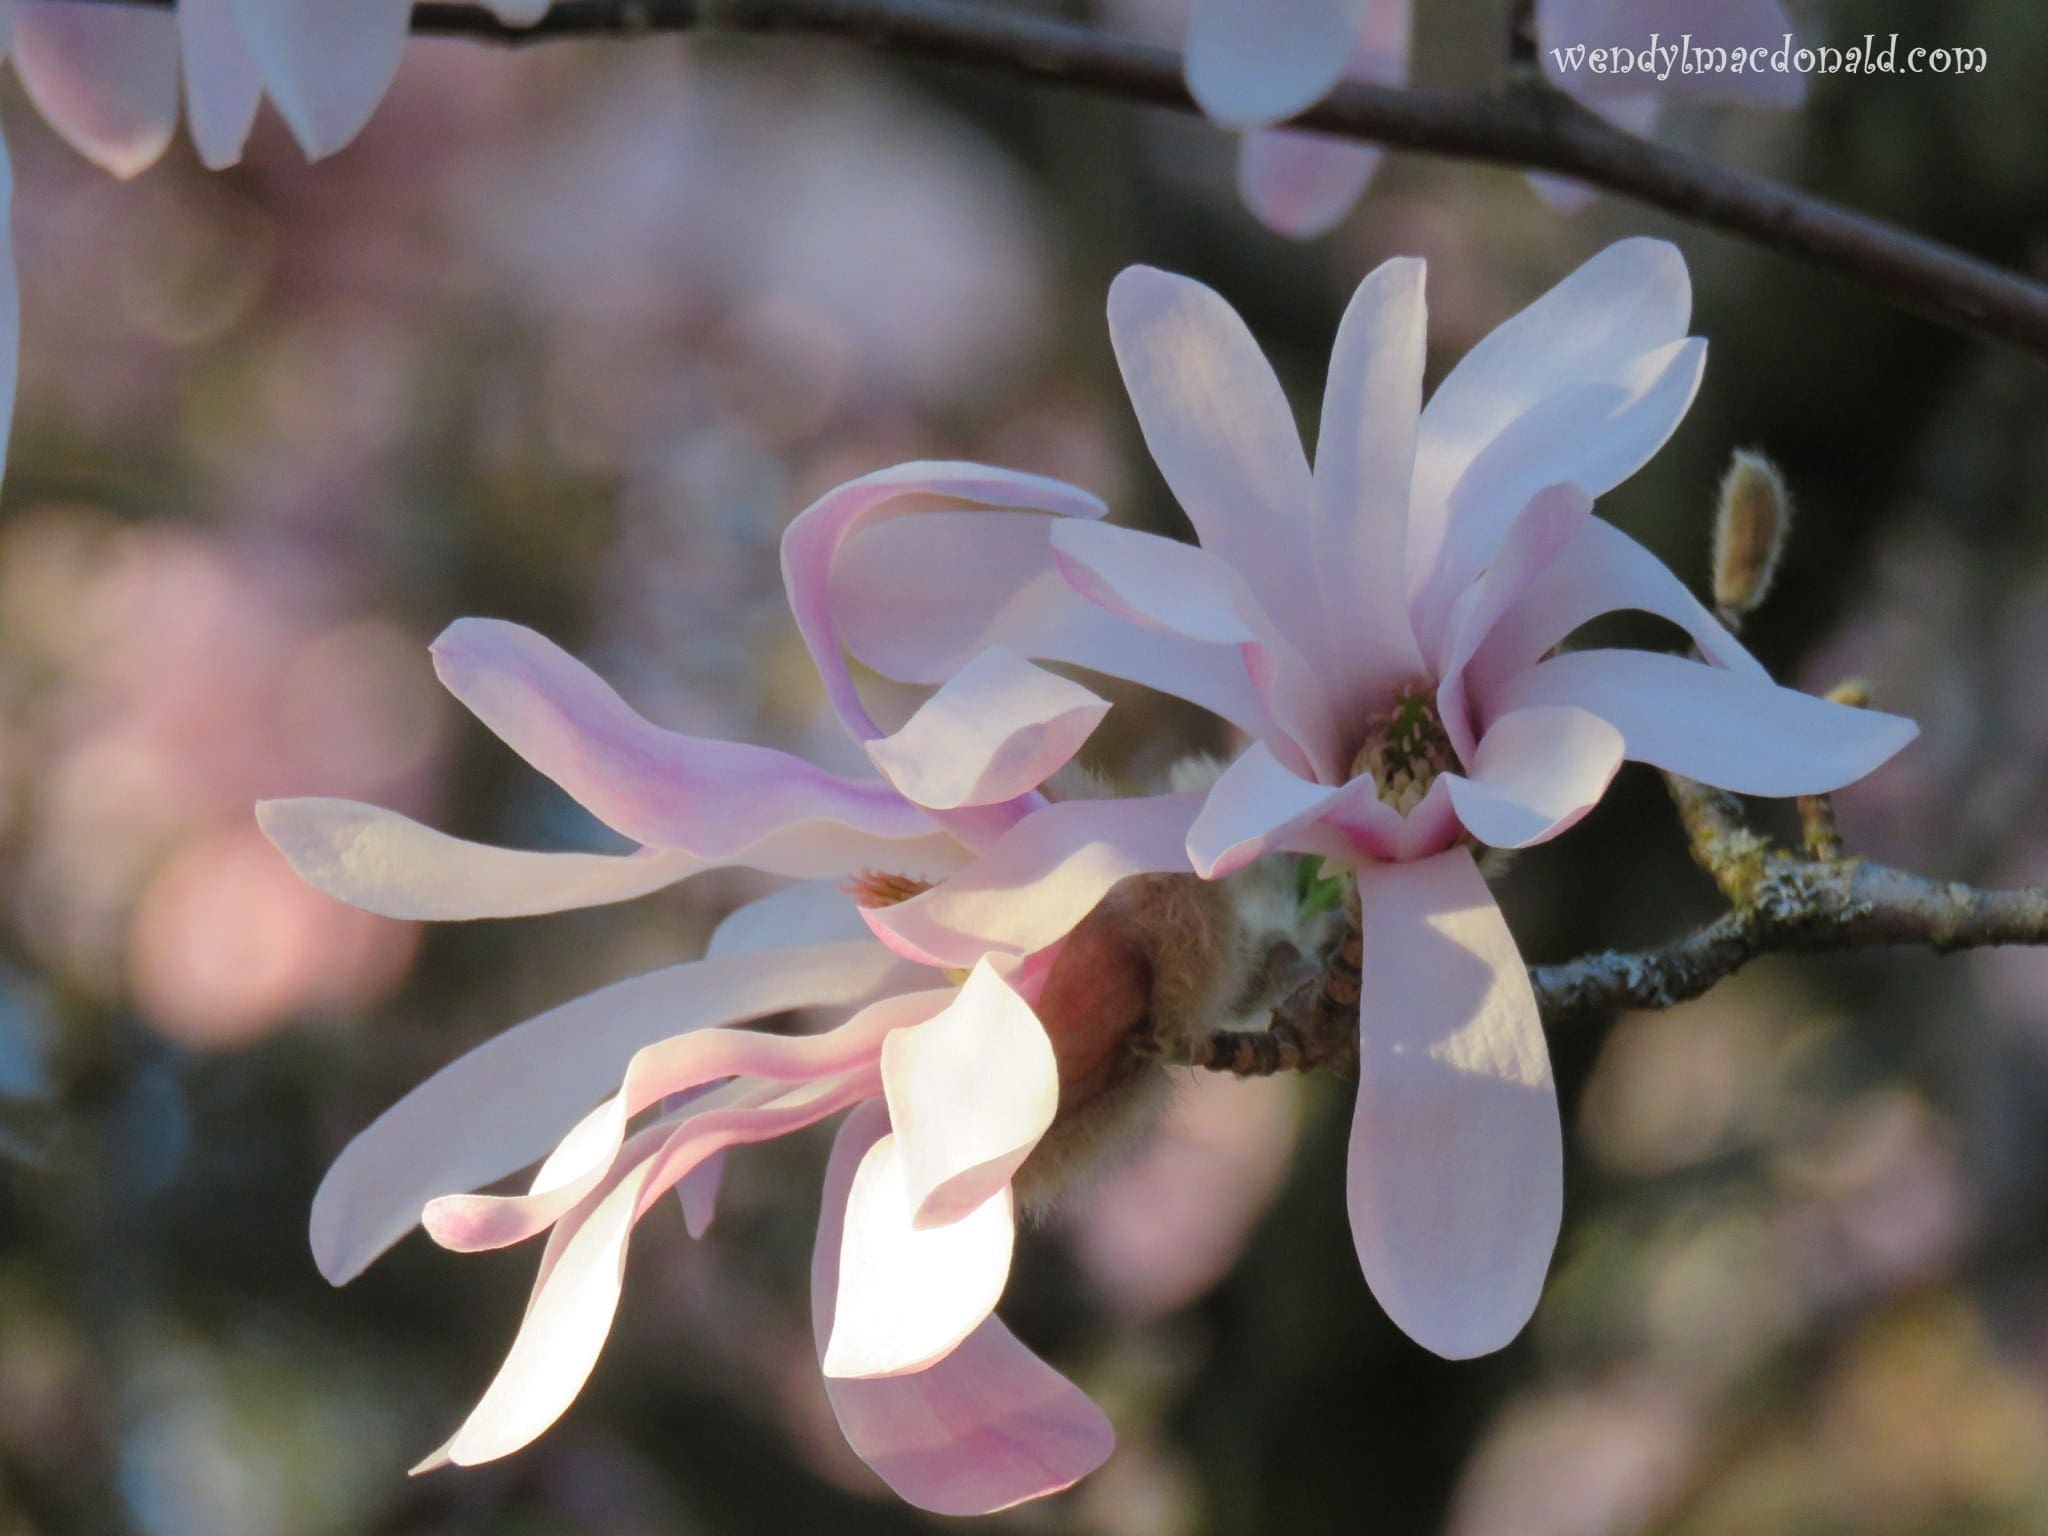 Tree Blossoms, photo credit: Wendy MacDonald